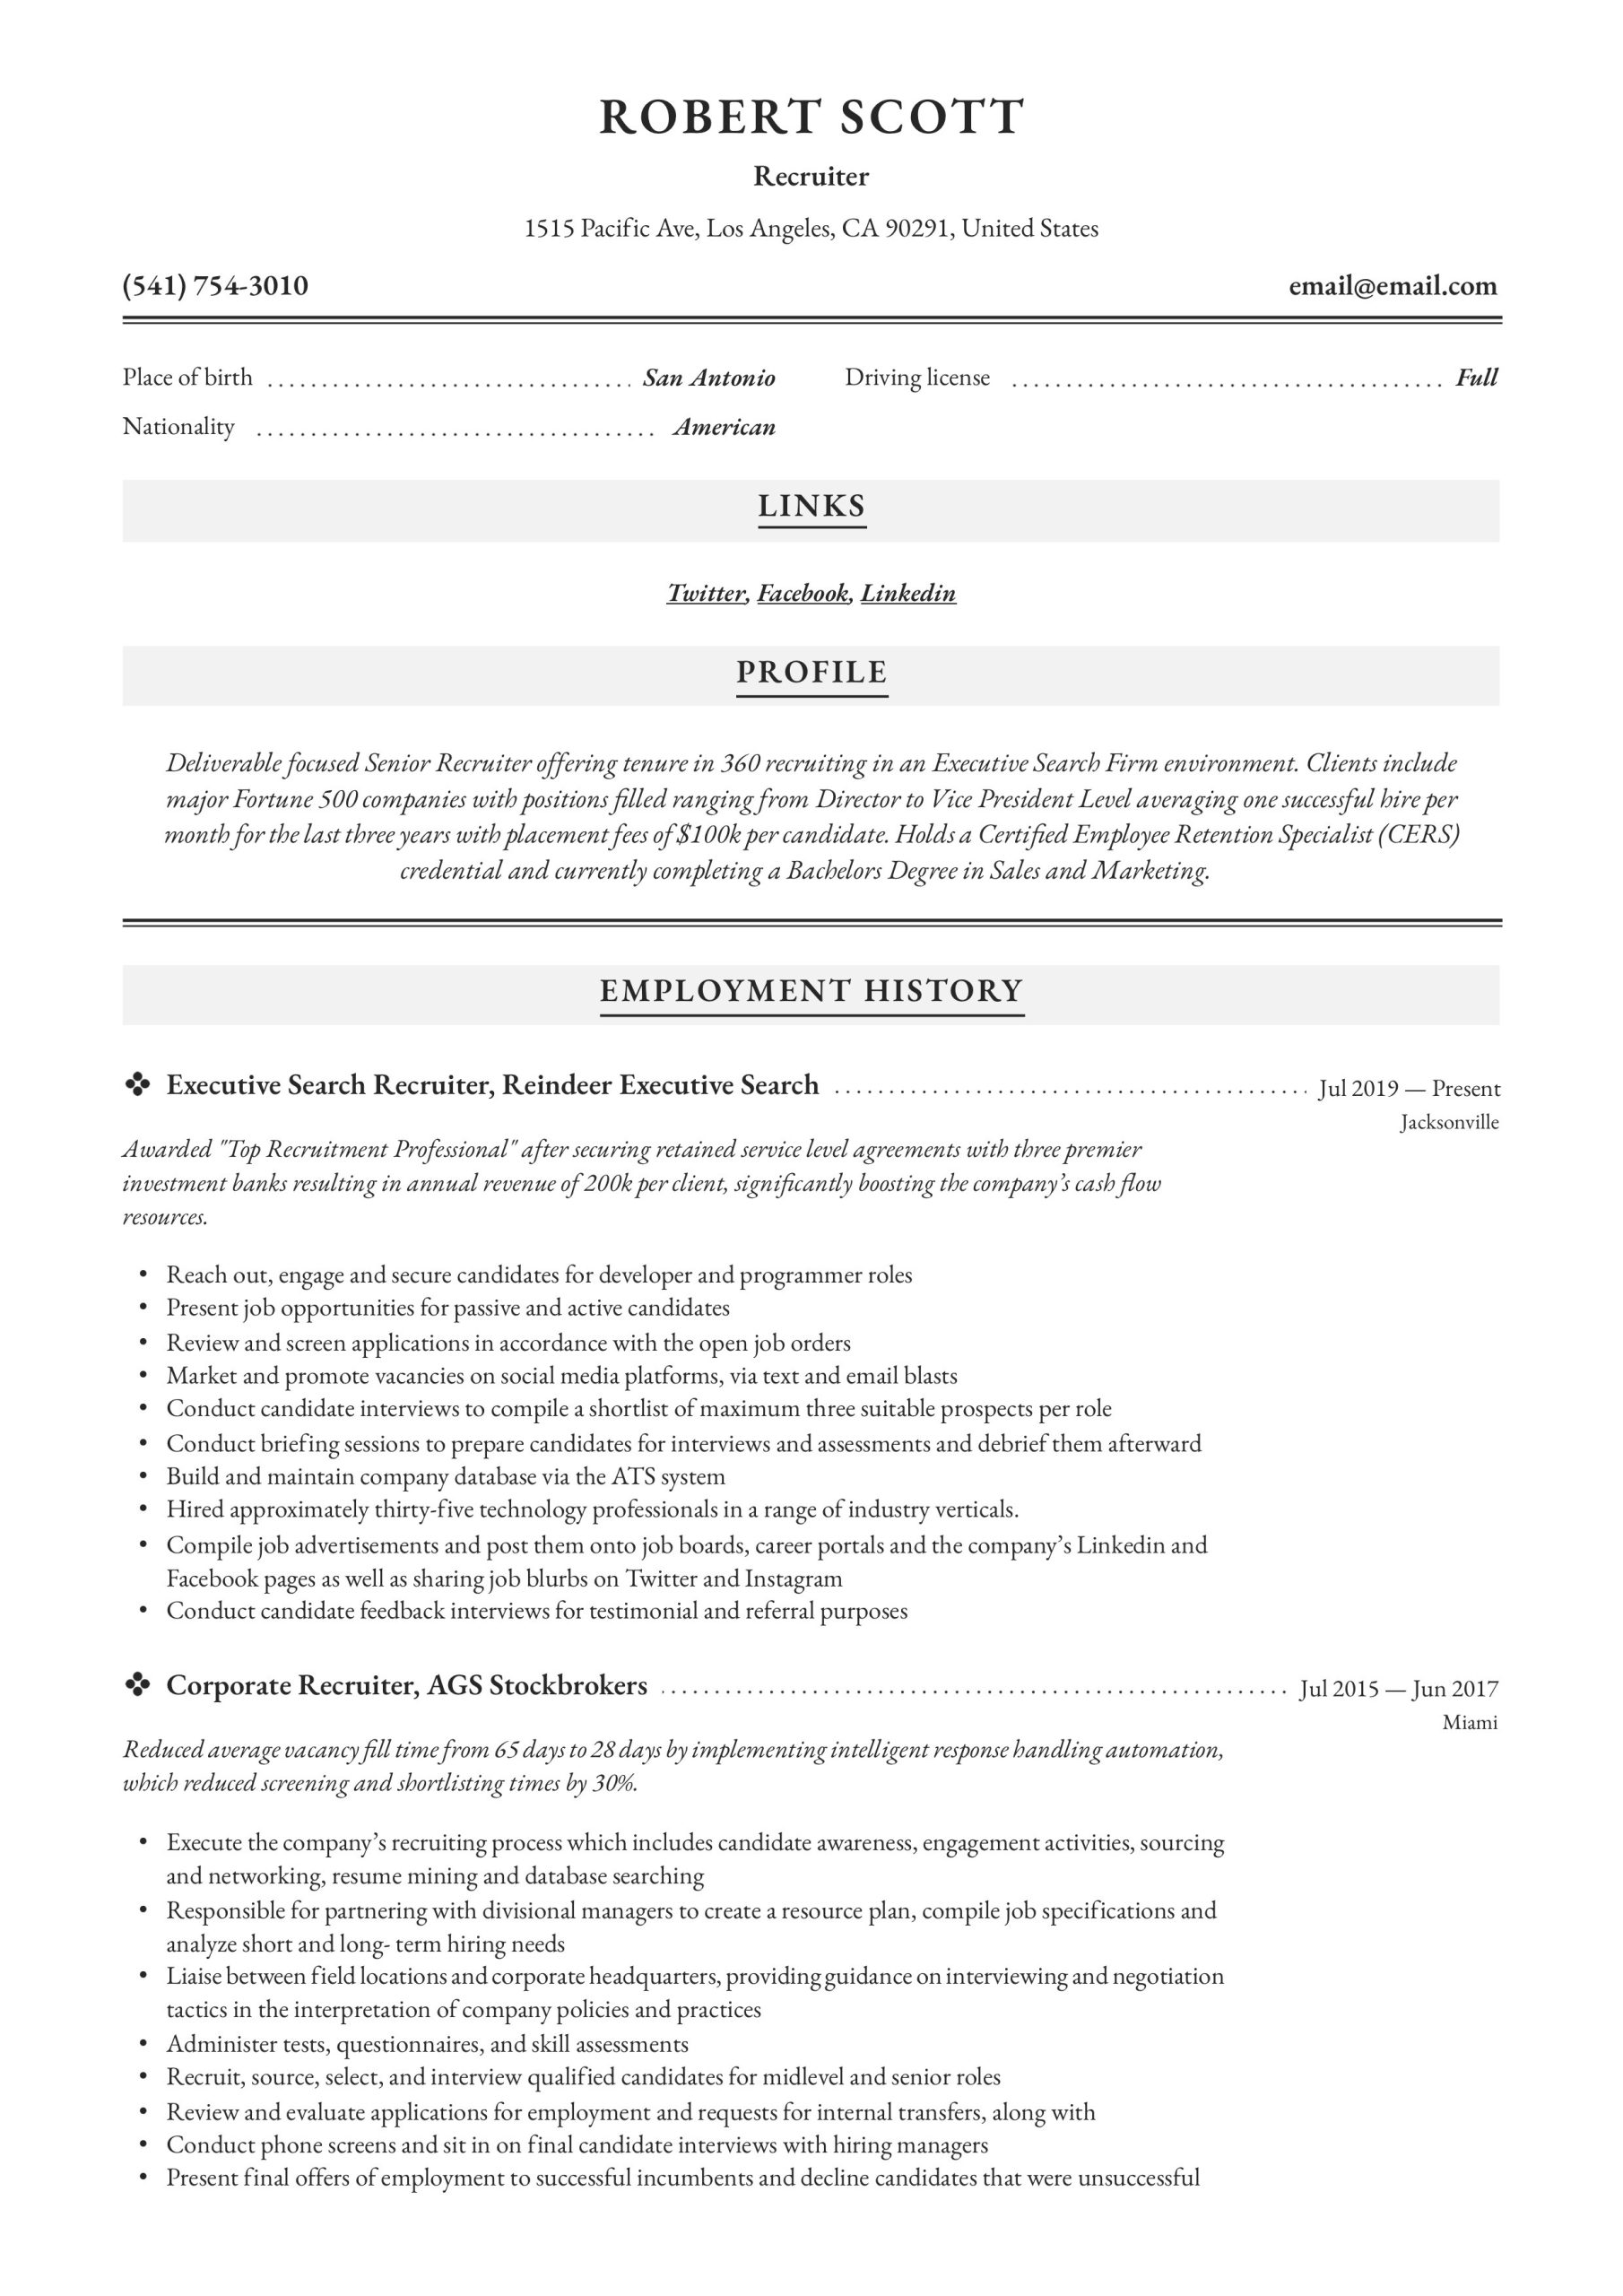 Sample Resume for Entry Level Recruiter Recruiter Resume & Writing Guide   12 Pdf Examples 2020